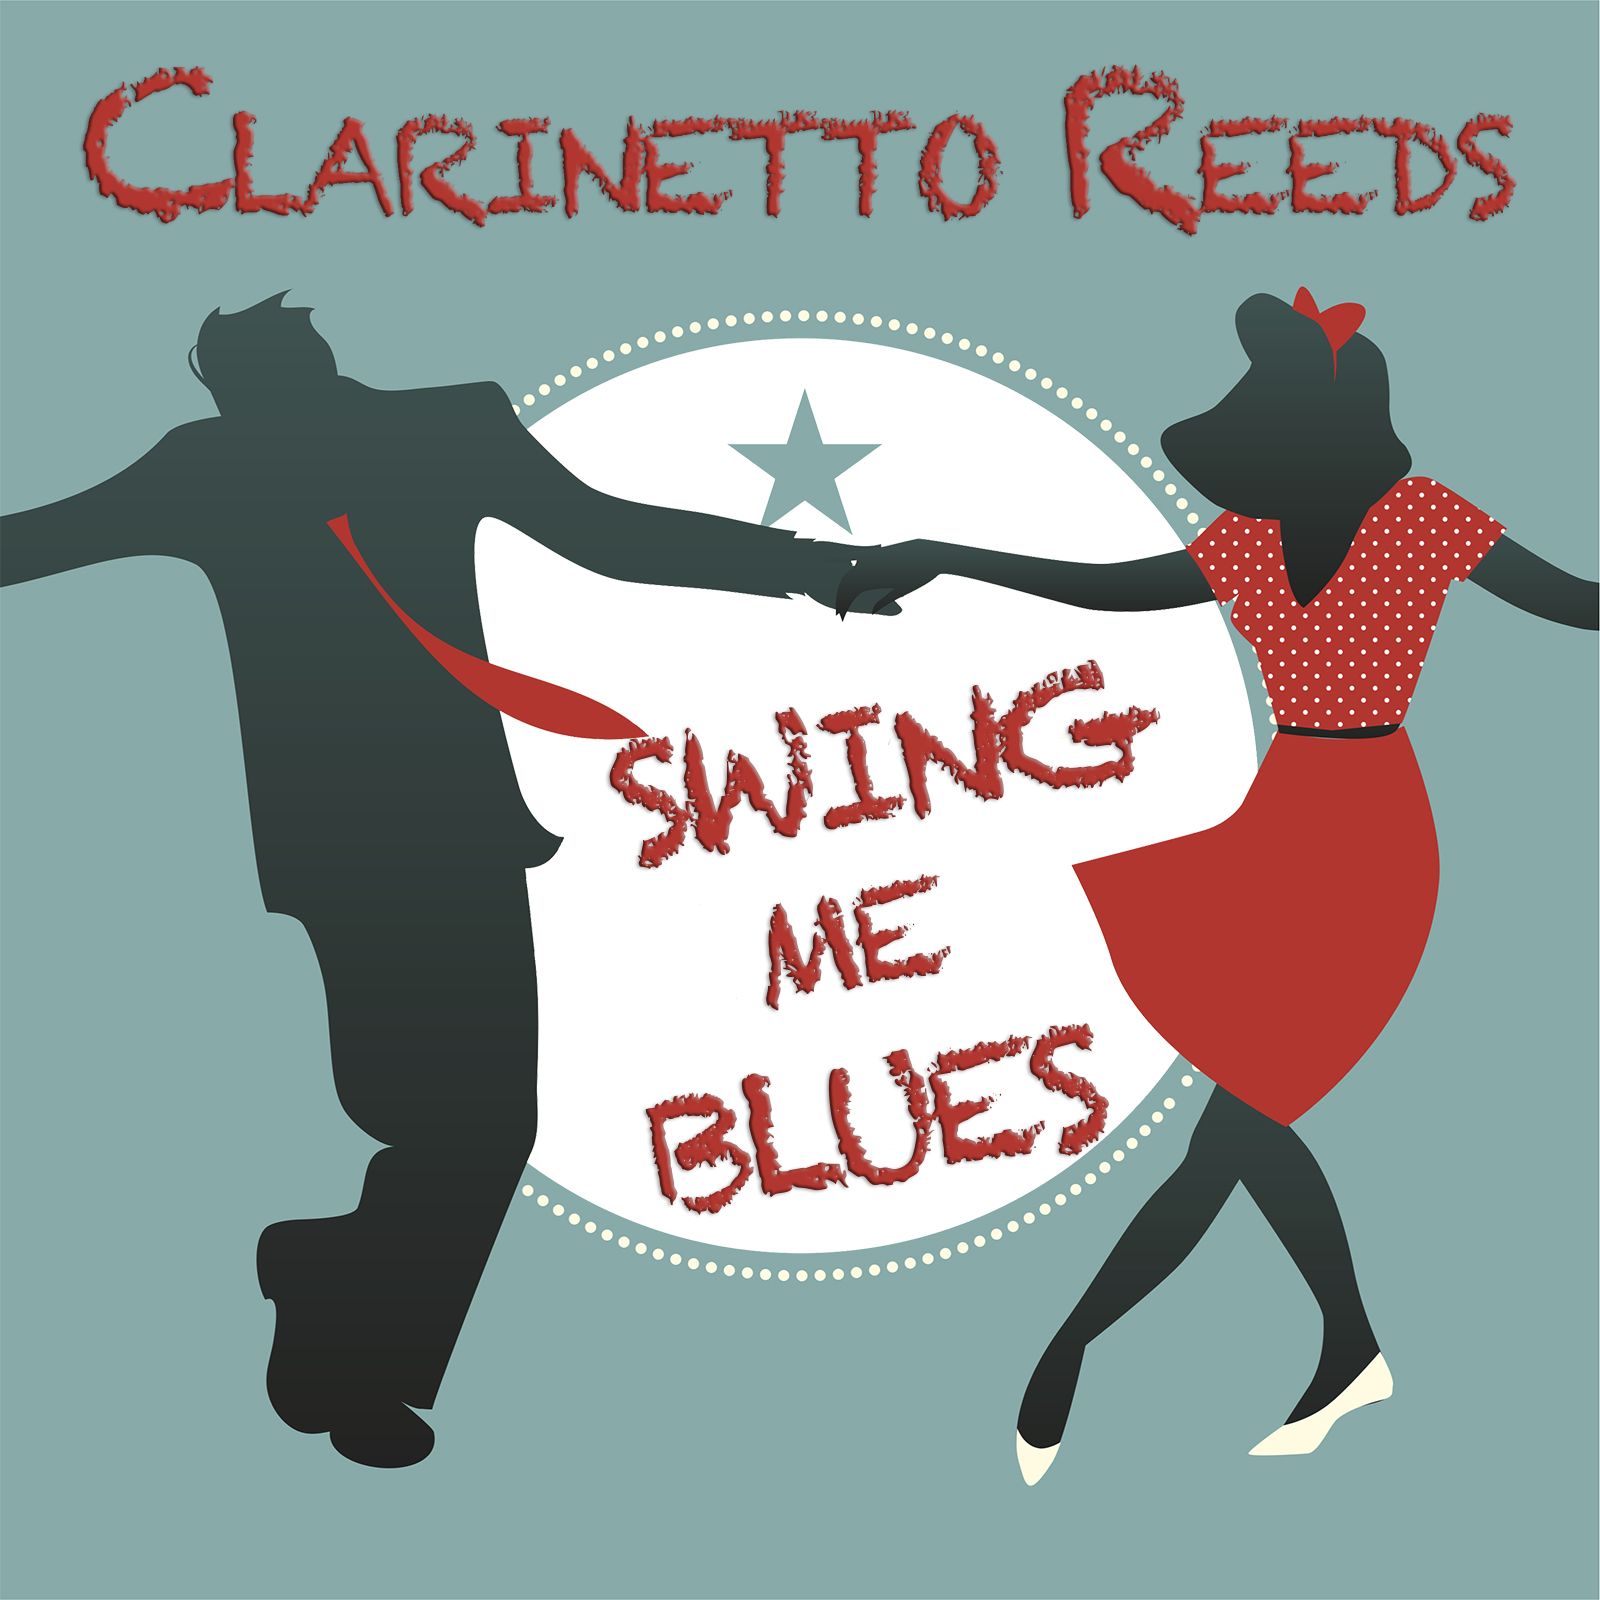 Clarinetto Reeds 